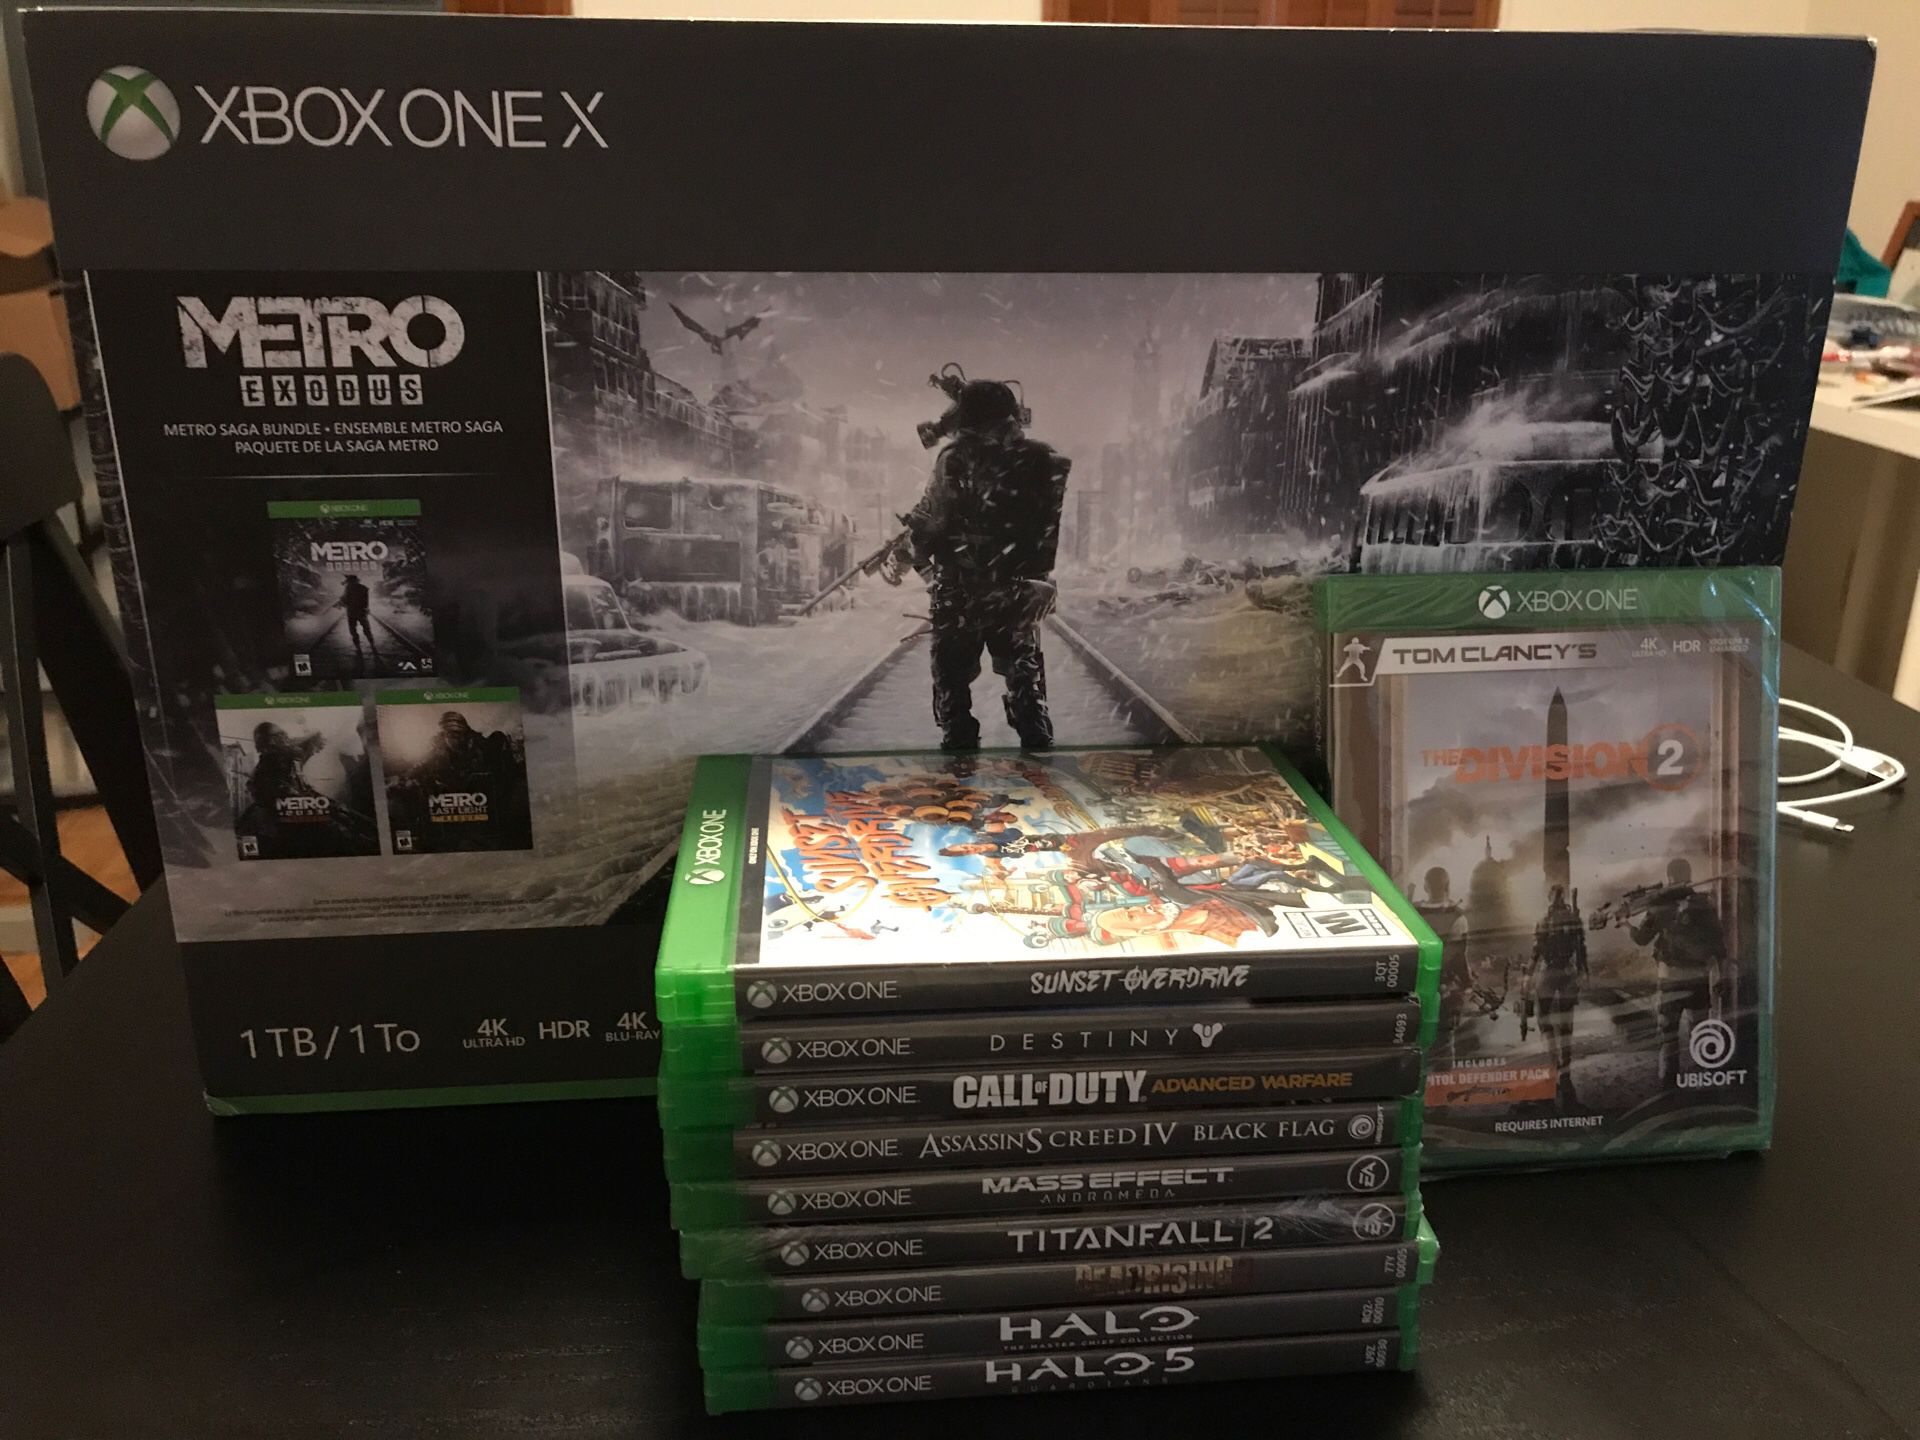 Xbox one x 1 TB metro exodus Bundle + shooters bundle! Endless shooters! Sealed and brand new!